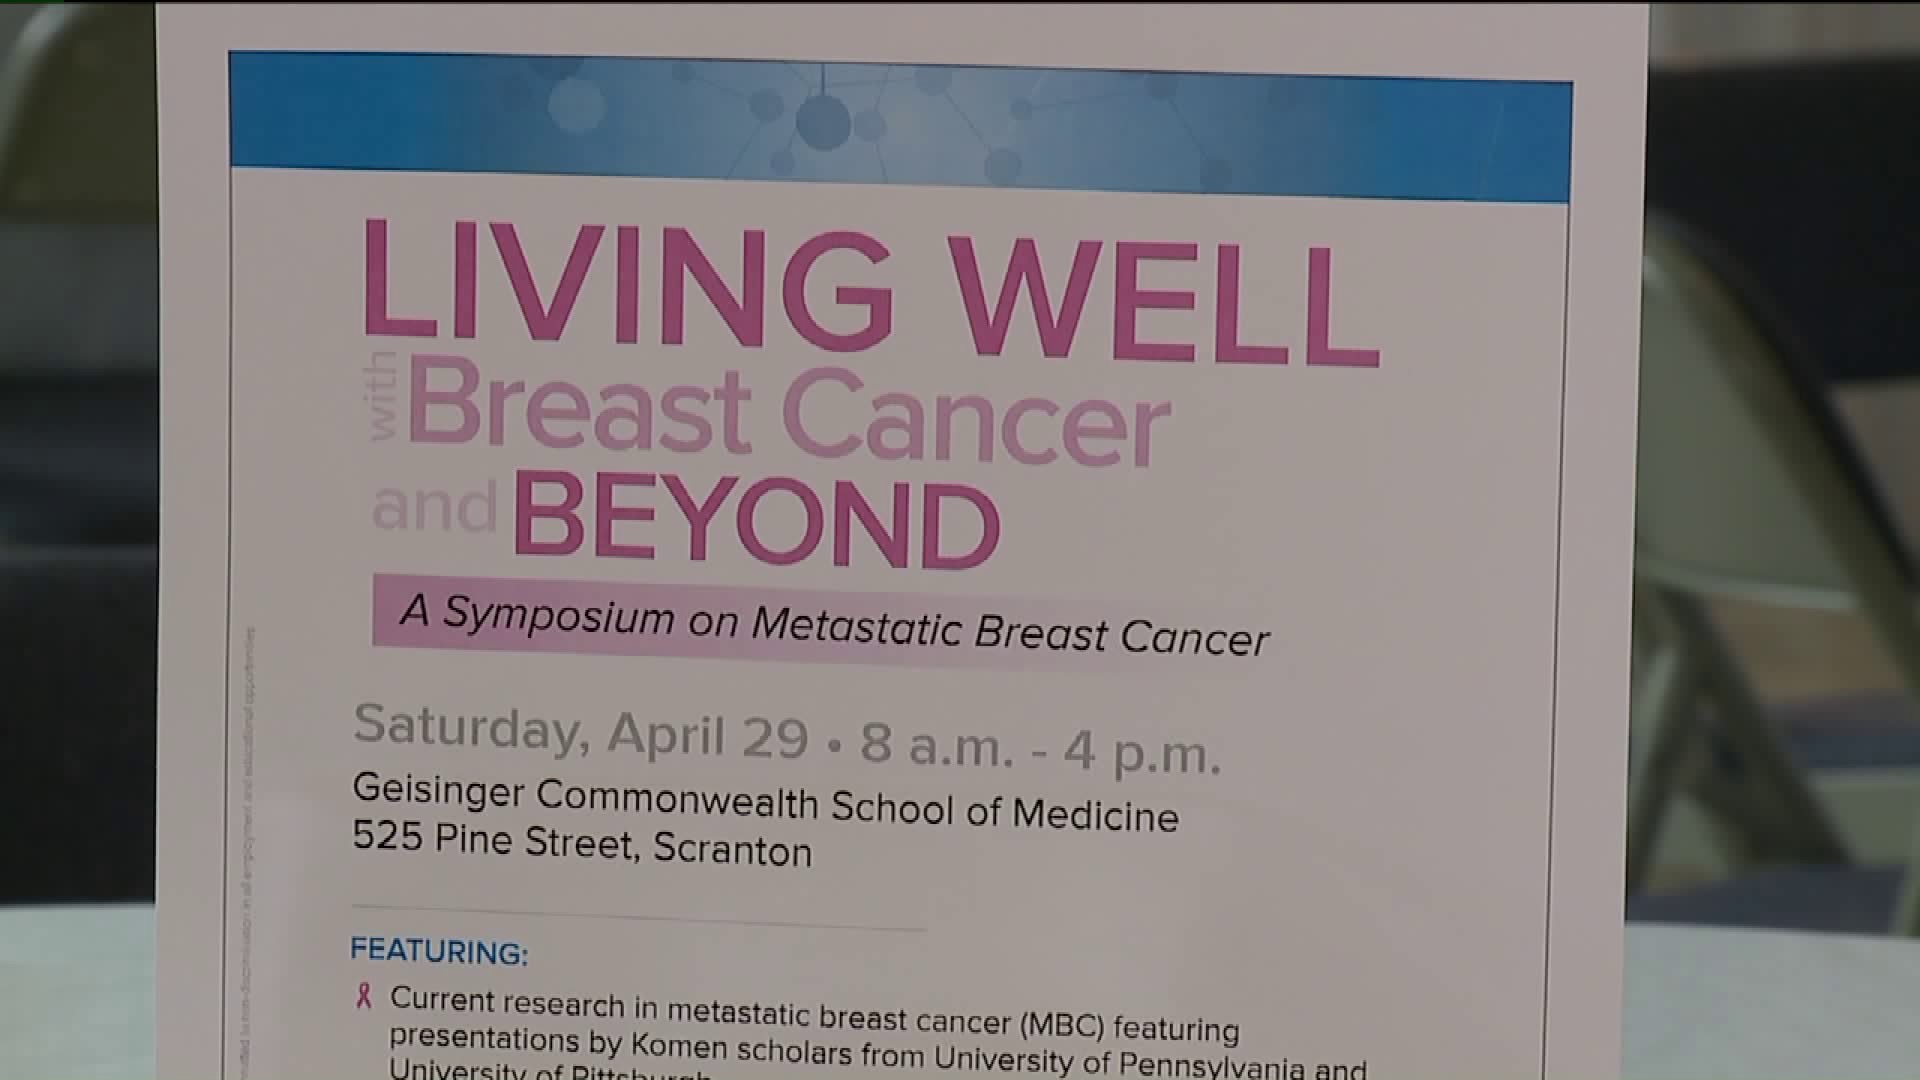 Healthwatch 16: Breast Cancer Symposium on Saturday